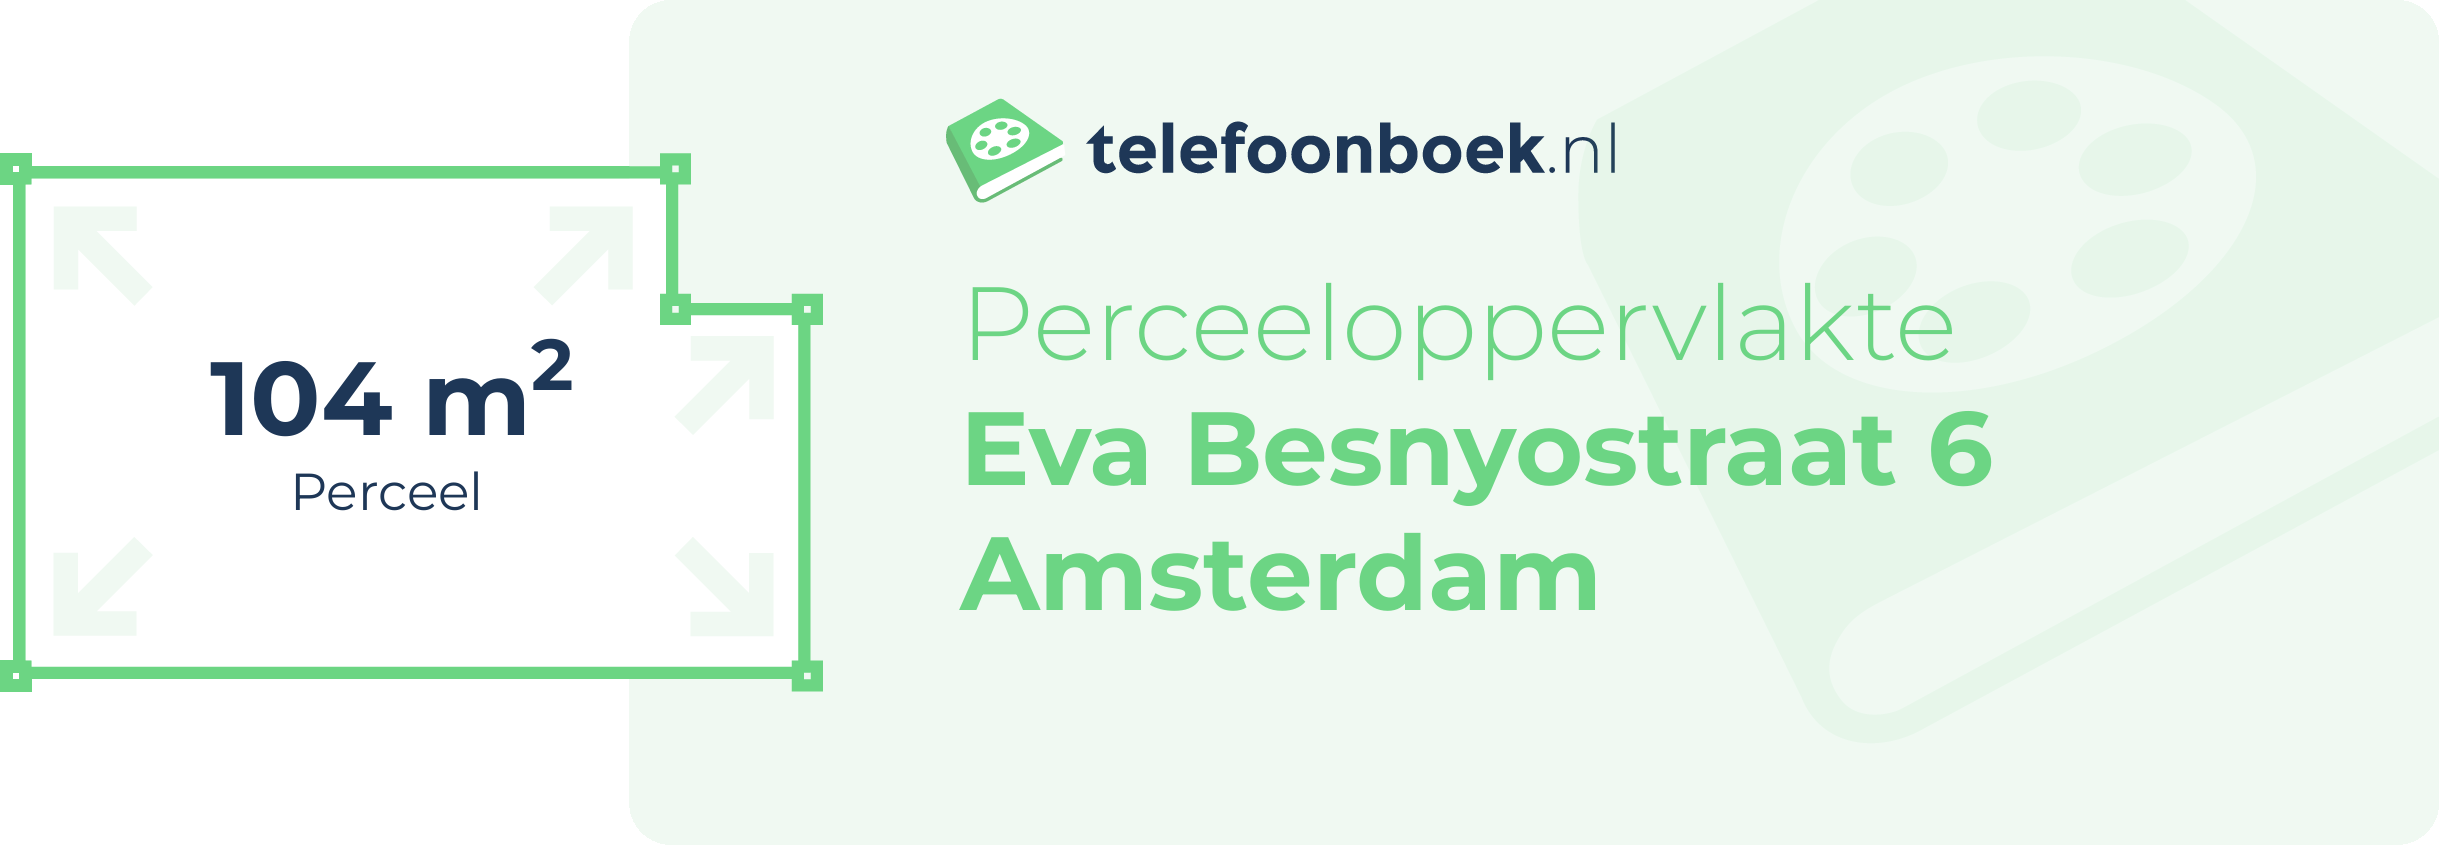 Perceeloppervlakte Eva Besnyostraat 6 Amsterdam